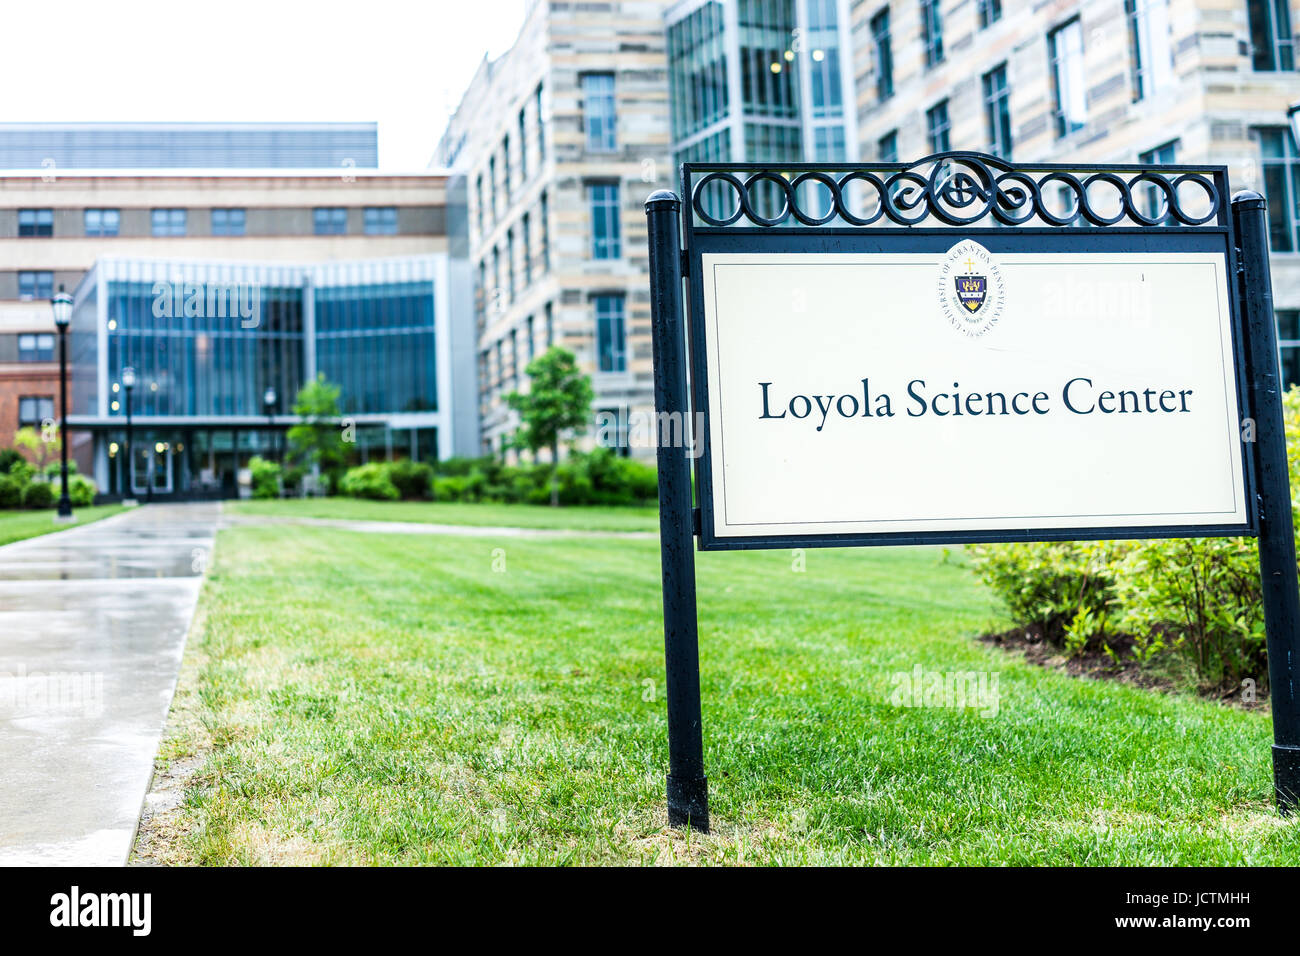 Scranton, USA - May 25, 2017: University of Scranton Loyola Science Center building with sign and entrance Stock Photo